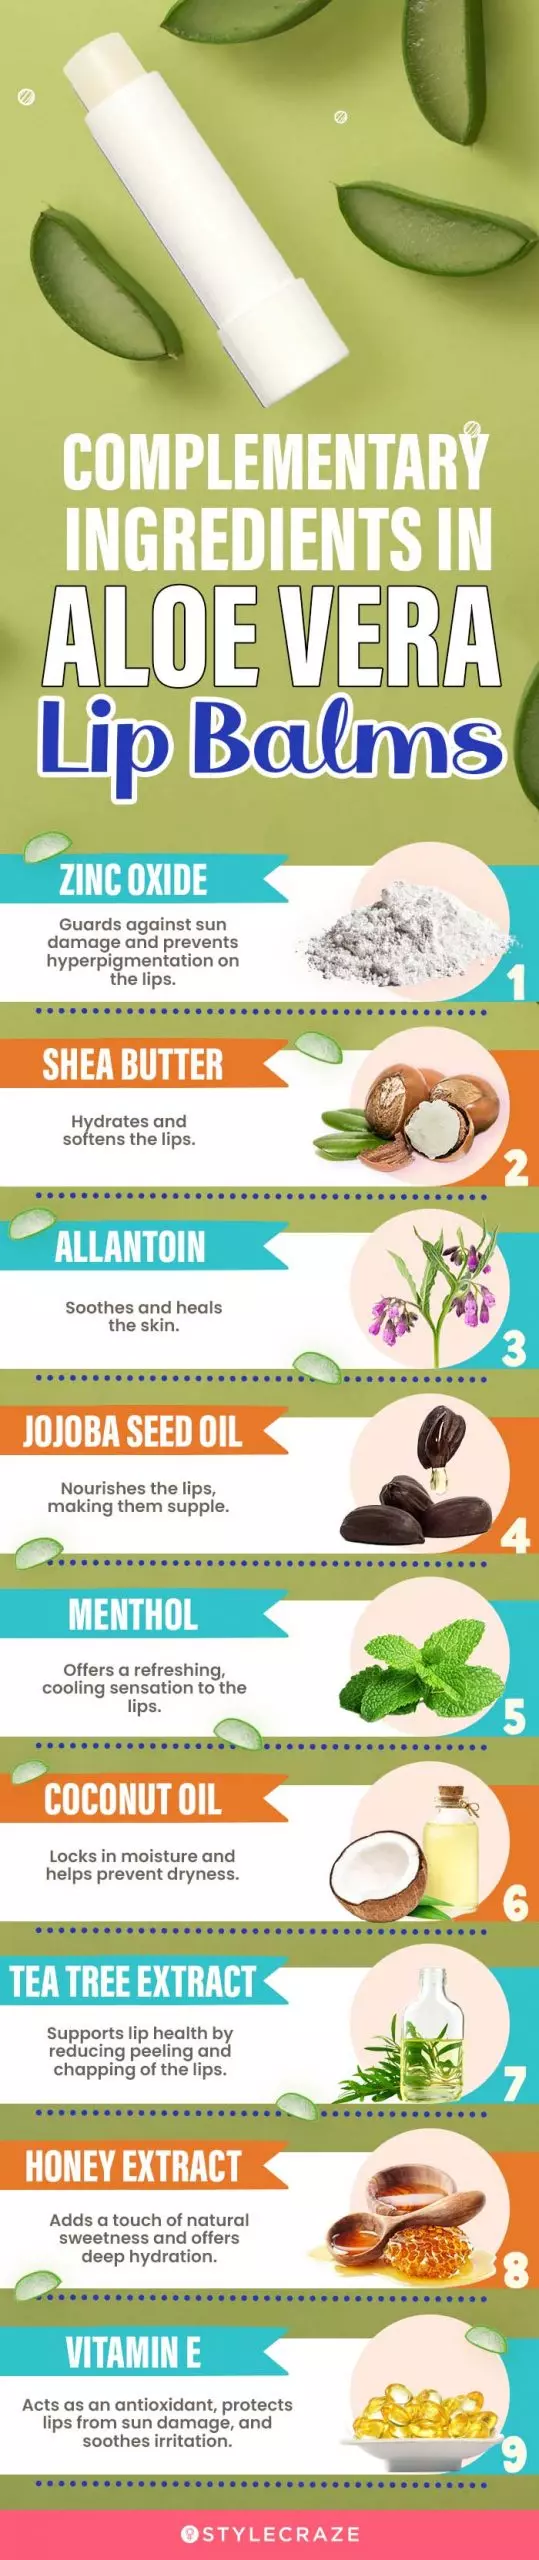 Complementary Ingredients In Aloe Vera Lip Balms (infographic)